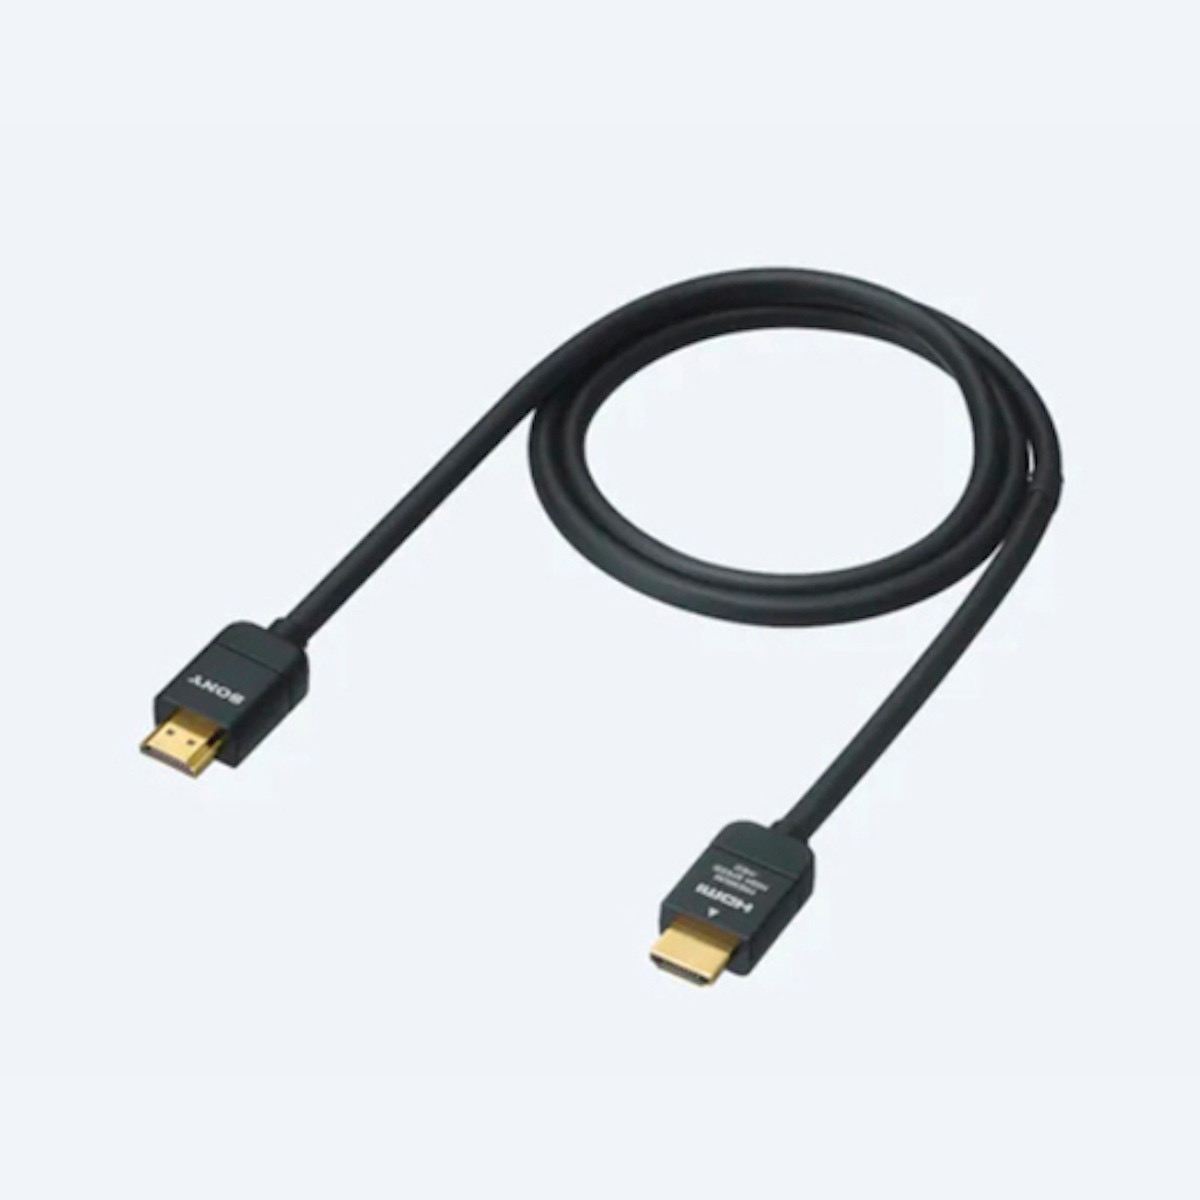 Sony DLC-HX 10 HDMI-Kabel mit Ethernet